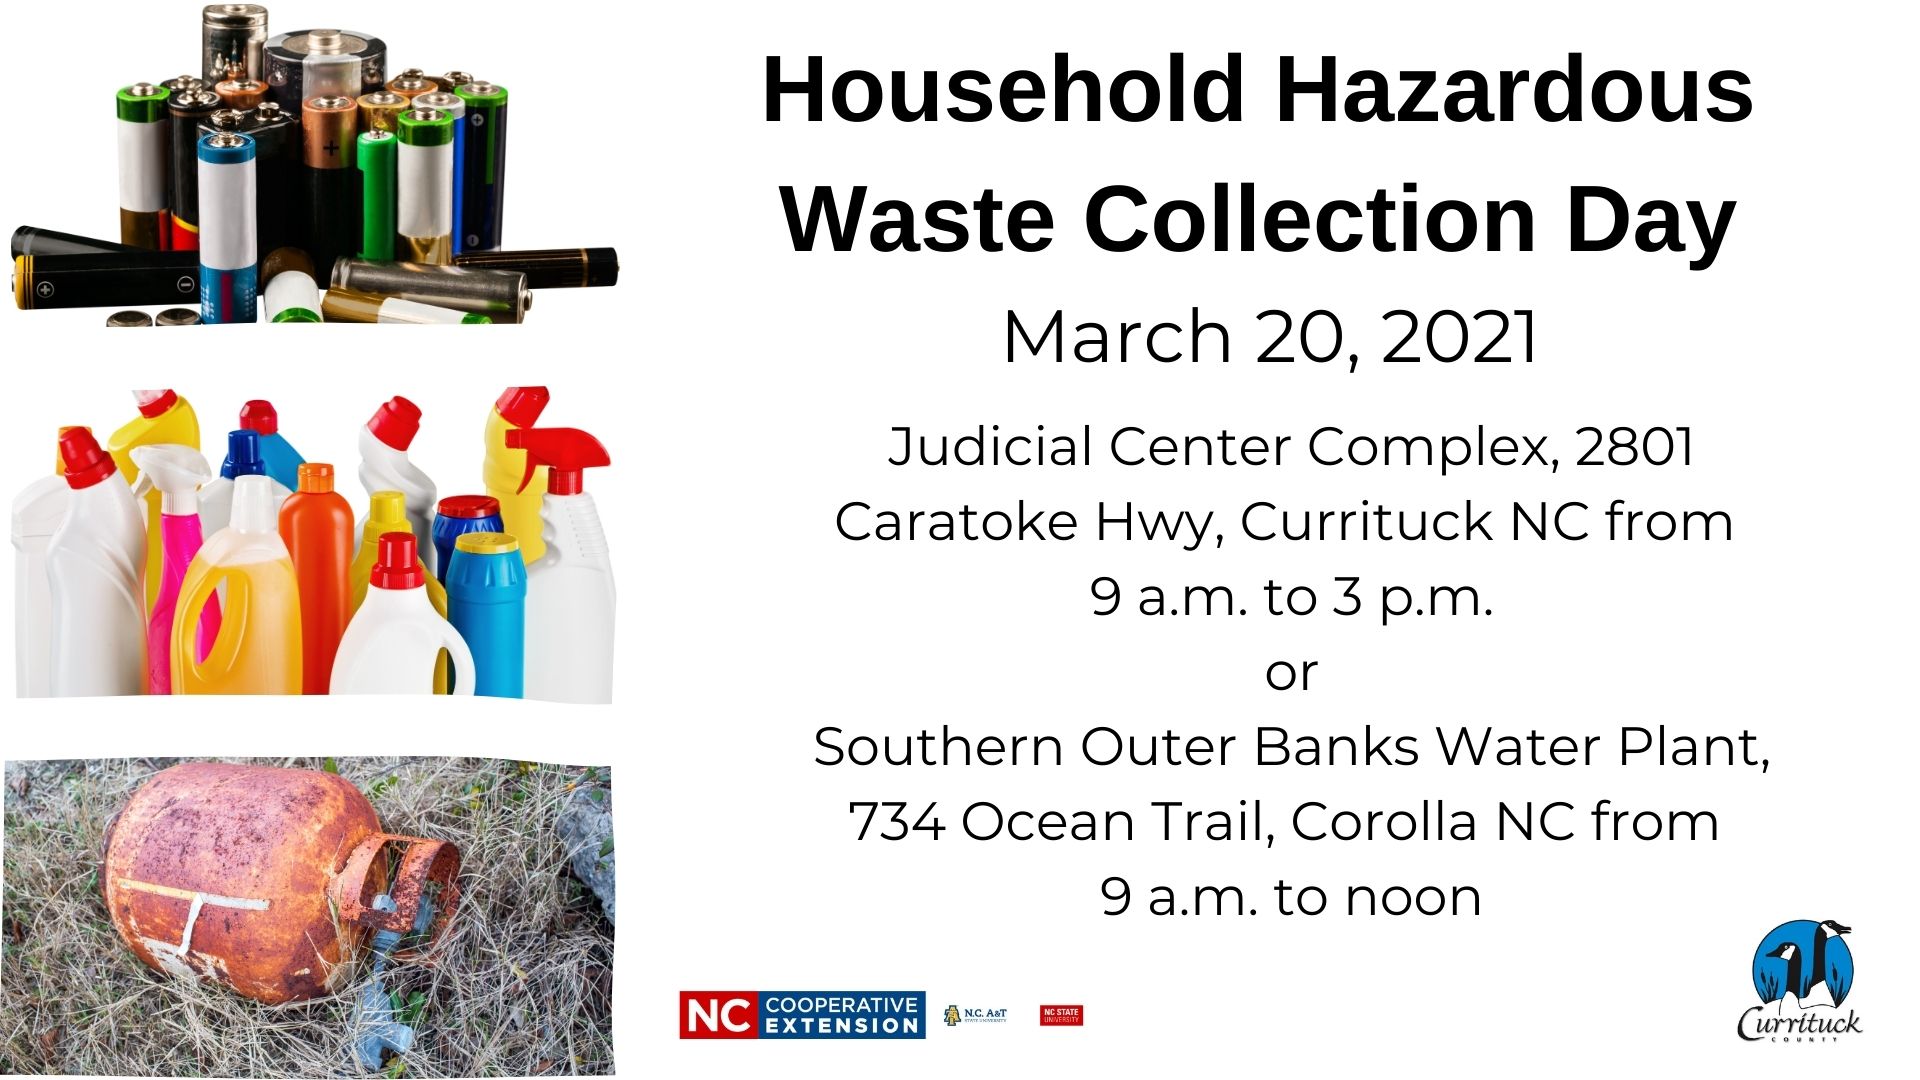 Flyer advertising Household Hazardous Waste Disposal Day